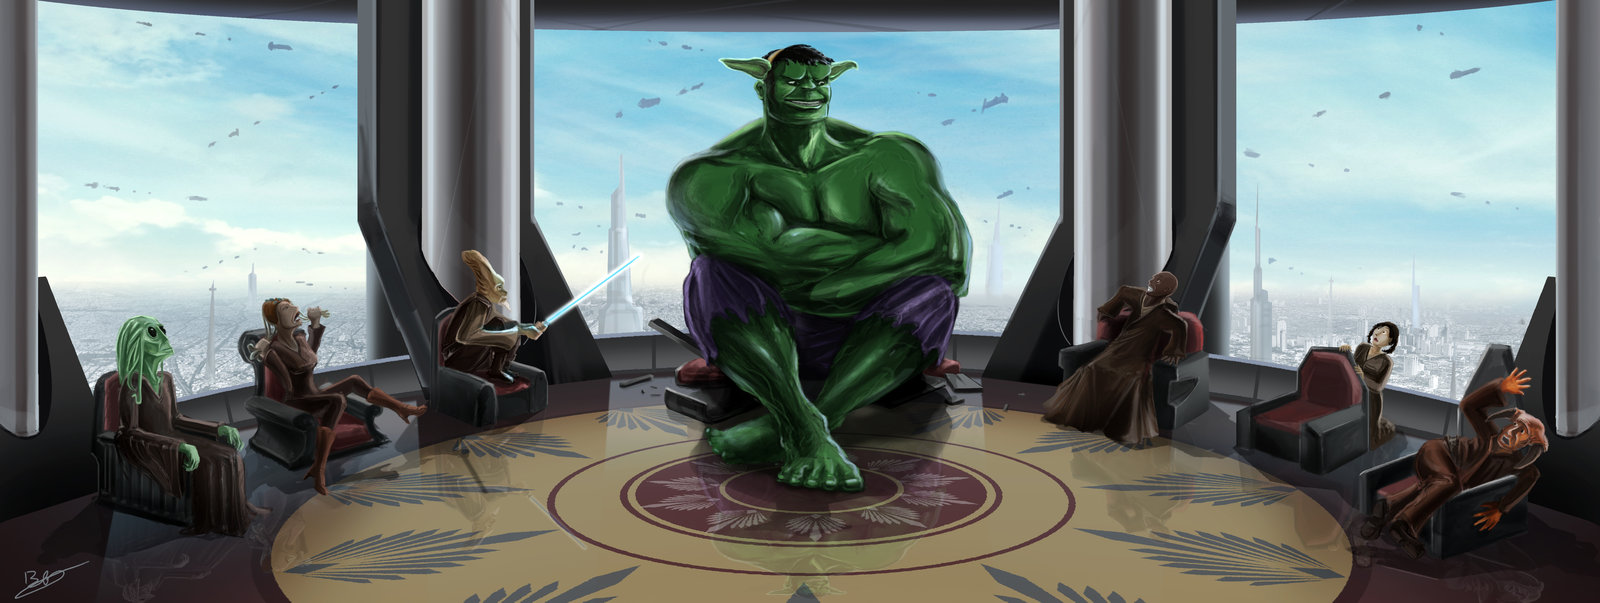  Yoda Hulk — "Hulk Dressed Up As Yoda" by&nbsp; xben  